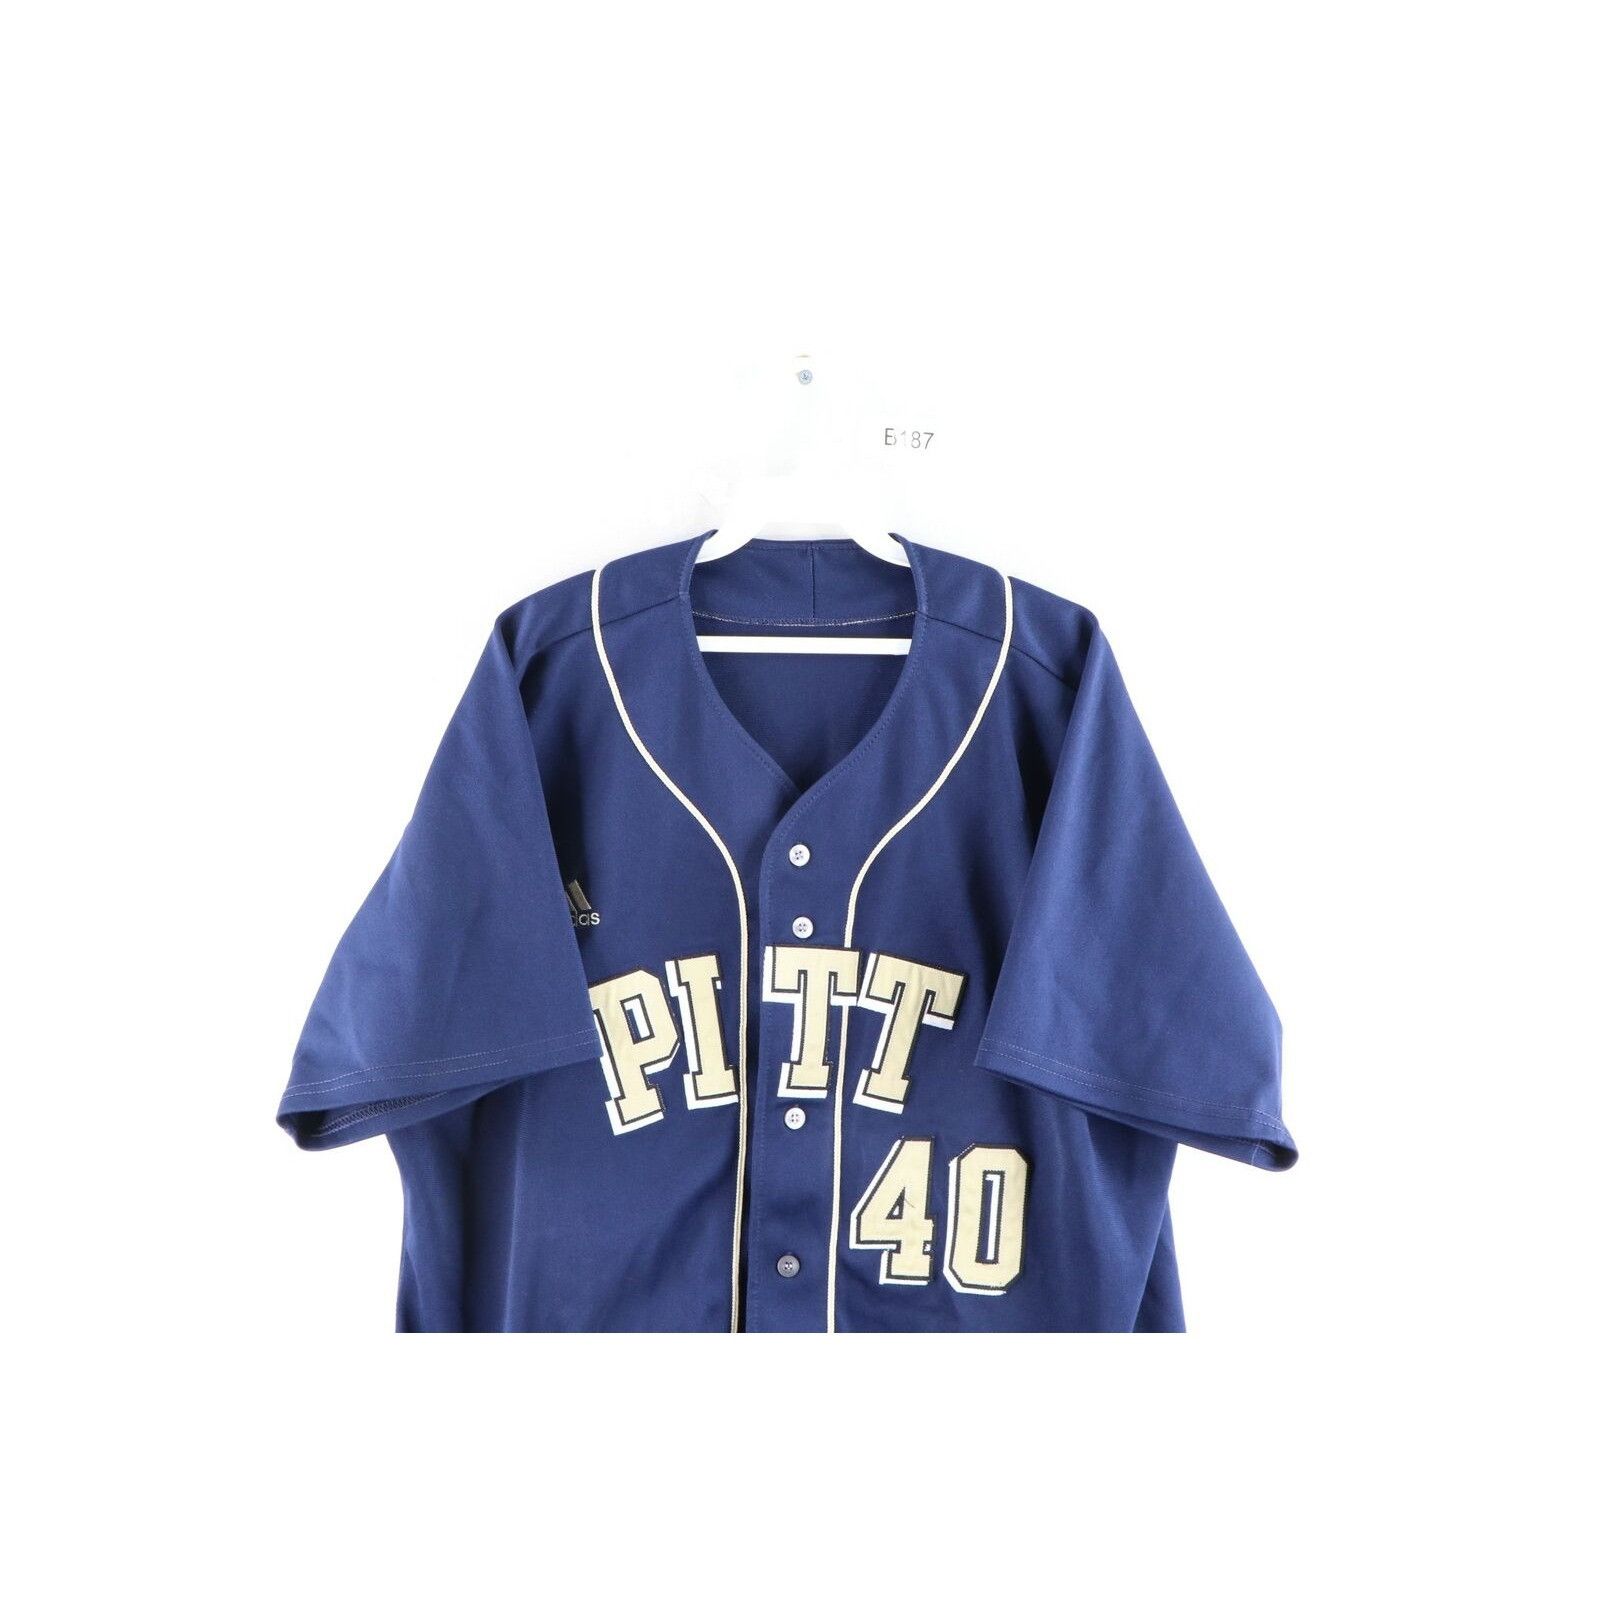 Adidas Adidas University of Pittsburgh Game Worn Baseball Jersey Size US S / EU 44-46 / 1 - 2 Preview